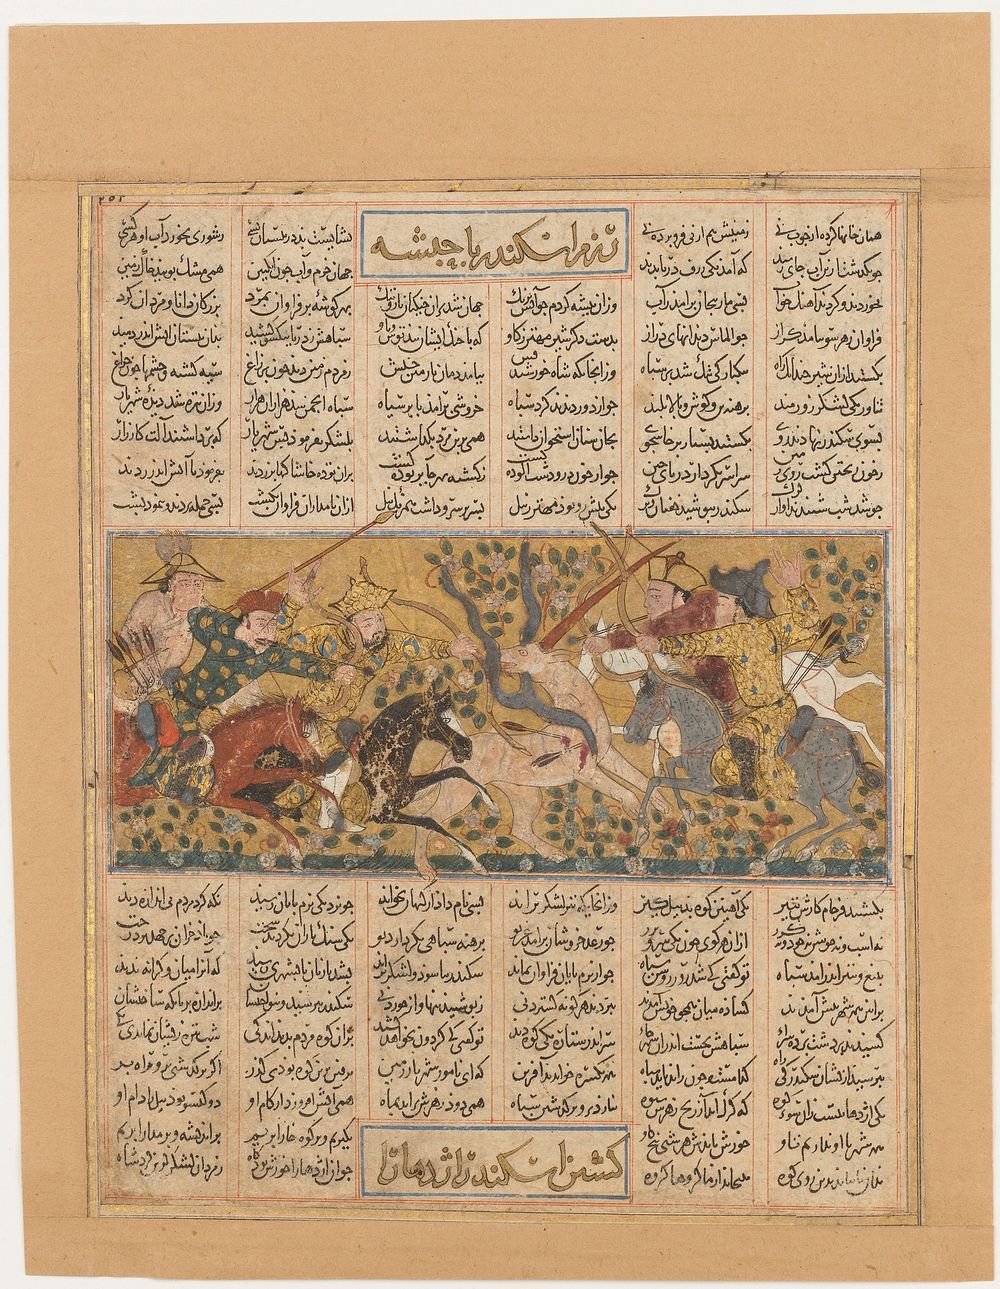 Iskandar Kills the Habash Monster", Folio from a Shahnama (Book of Kings) of Firdausi, Abu'l Qasim Firdausi (author)